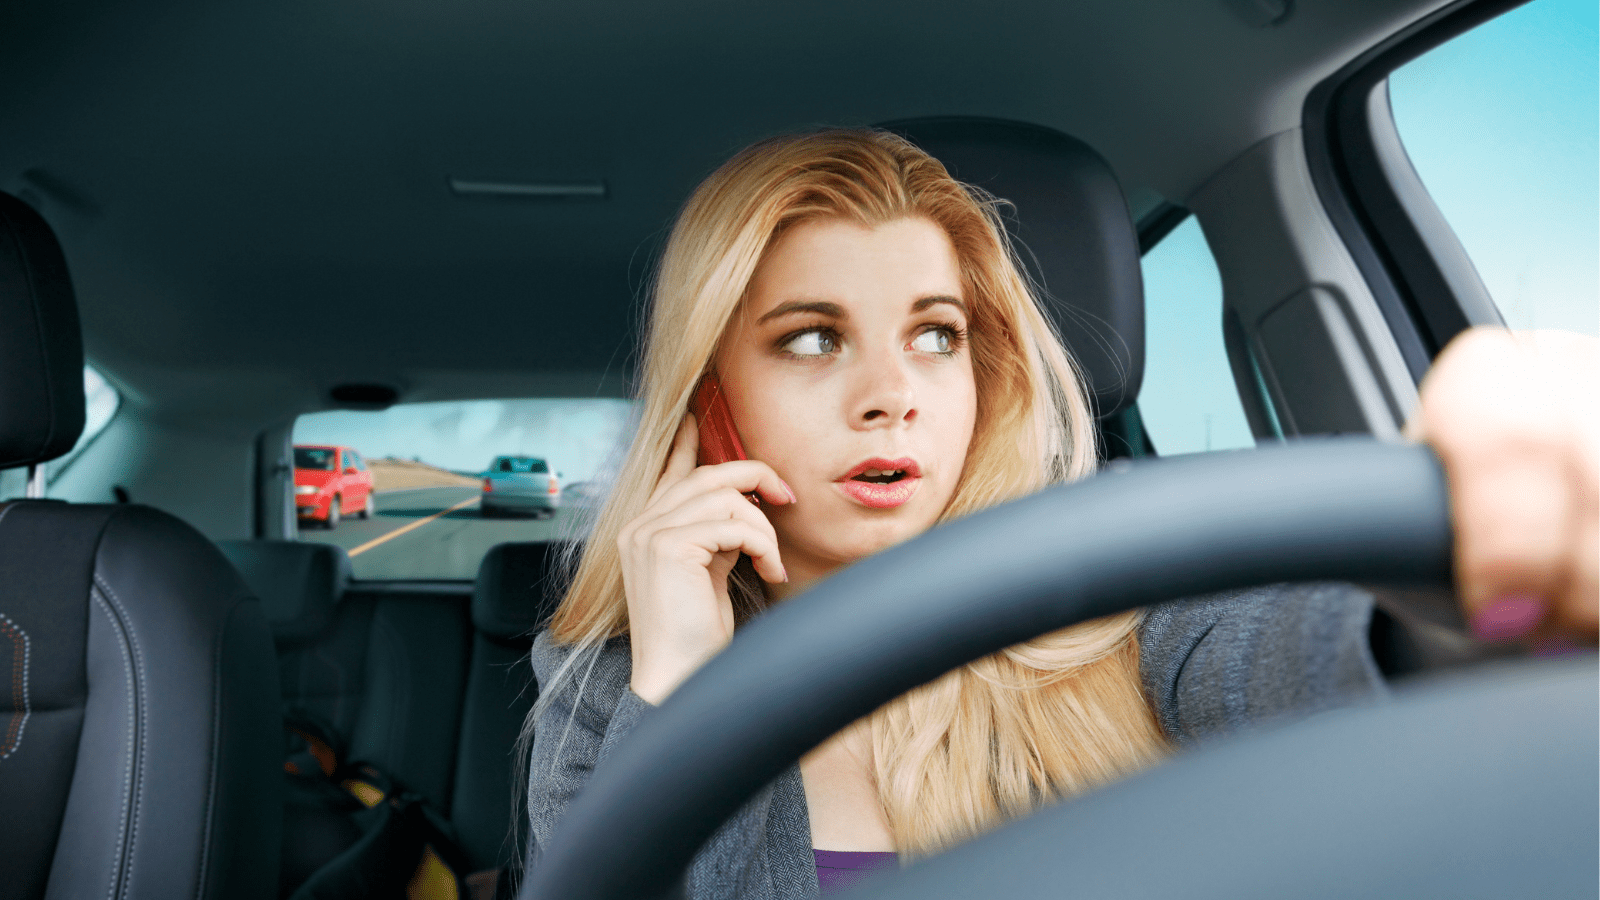 Girl driving a car having phone call(opens